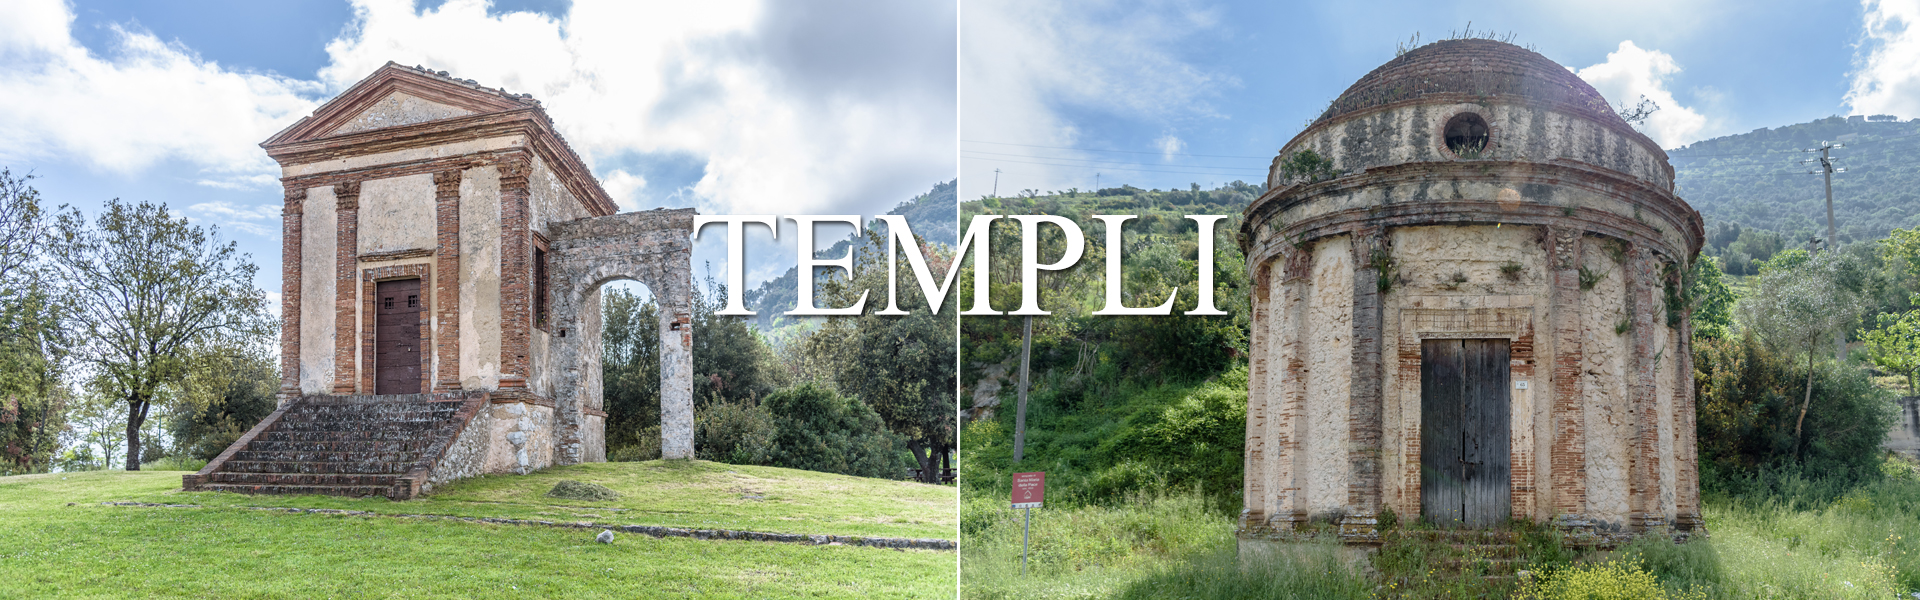 templi-1920x600